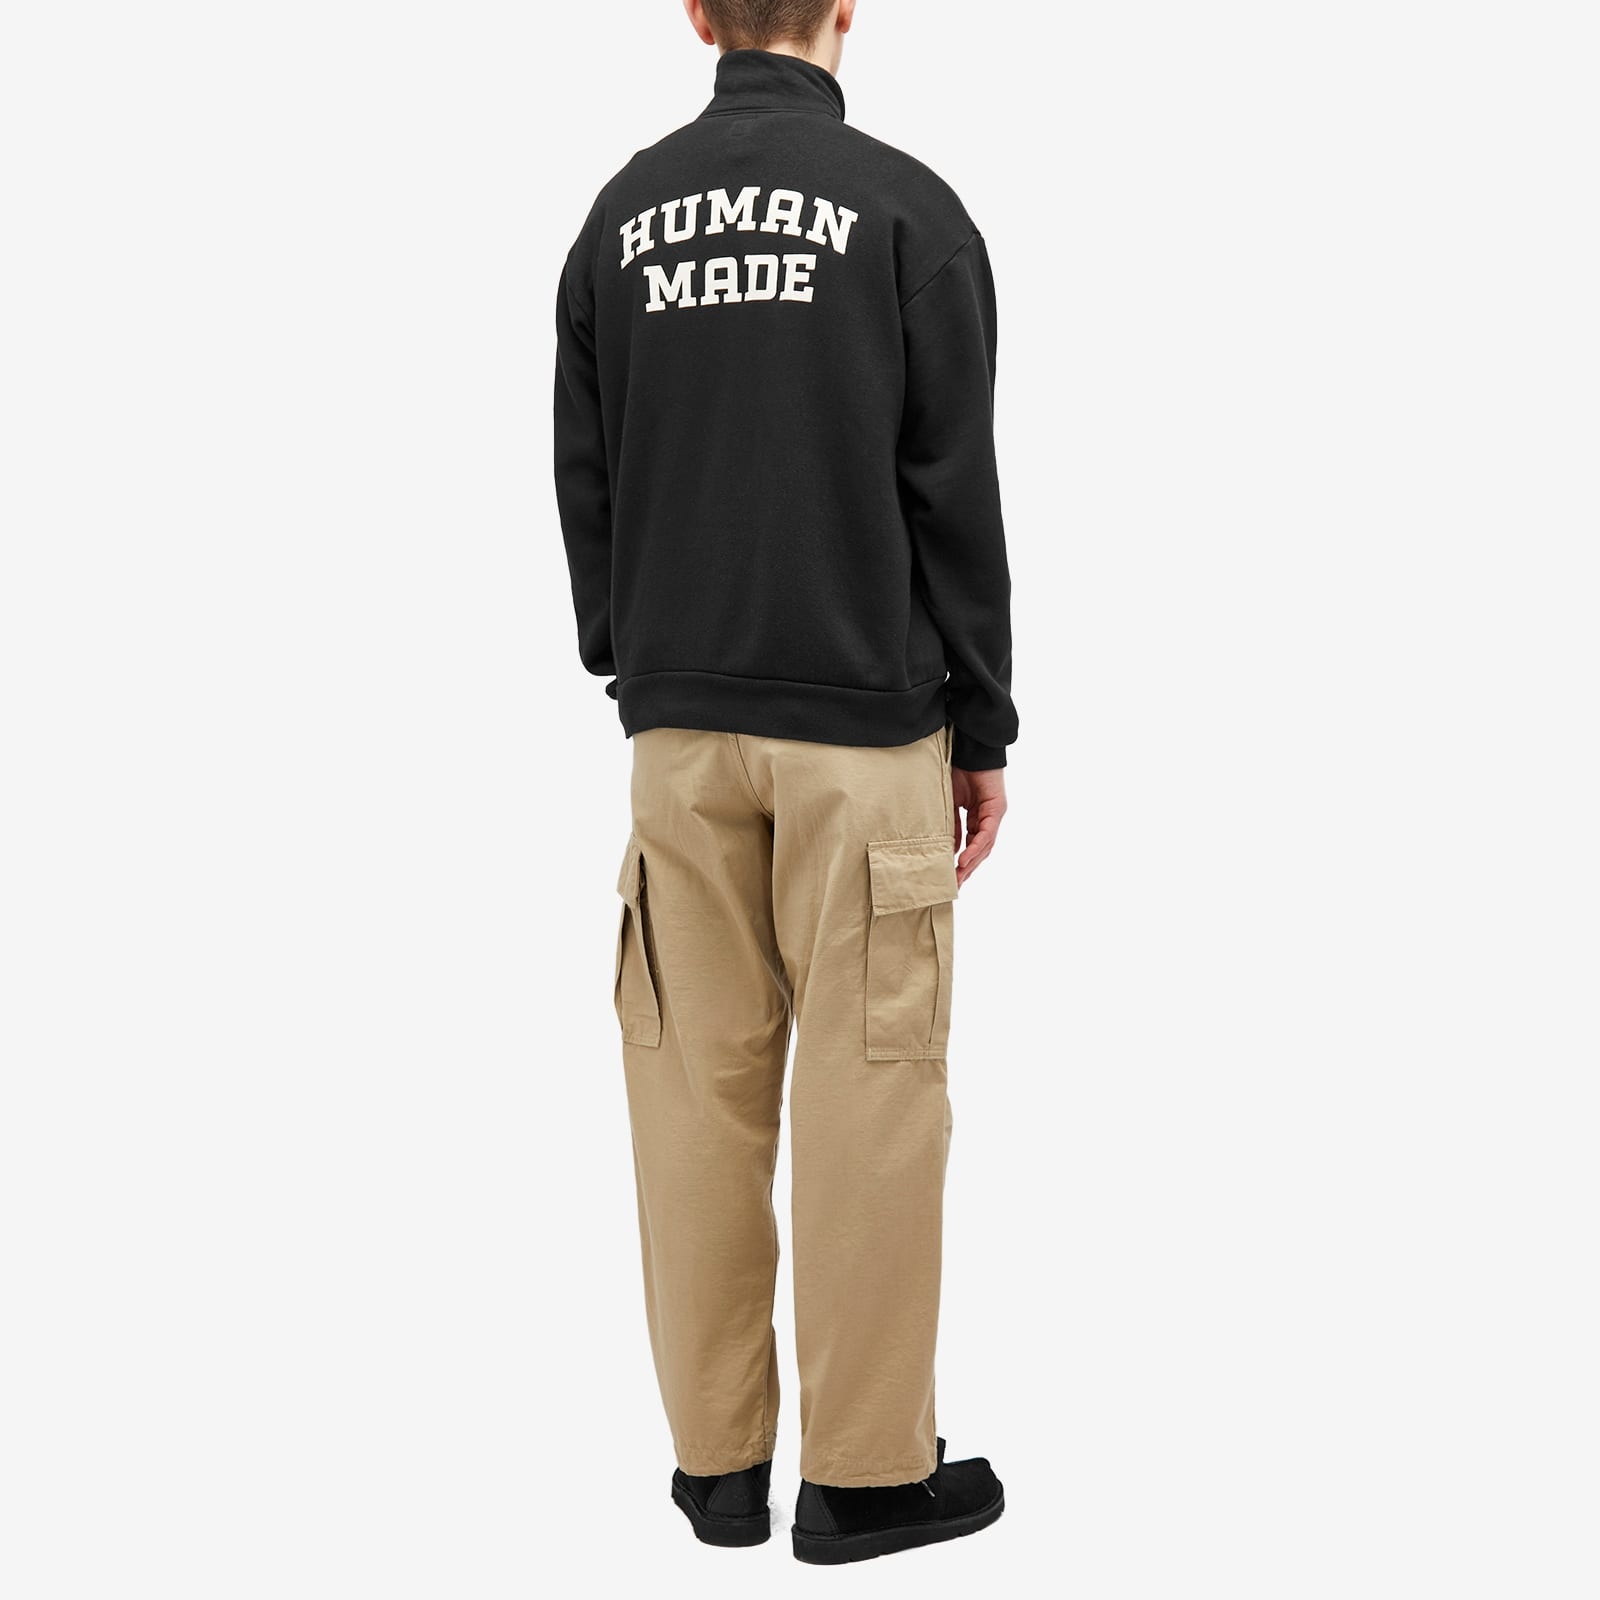 Human Made Military Half-Zip Sweatshirt - 4